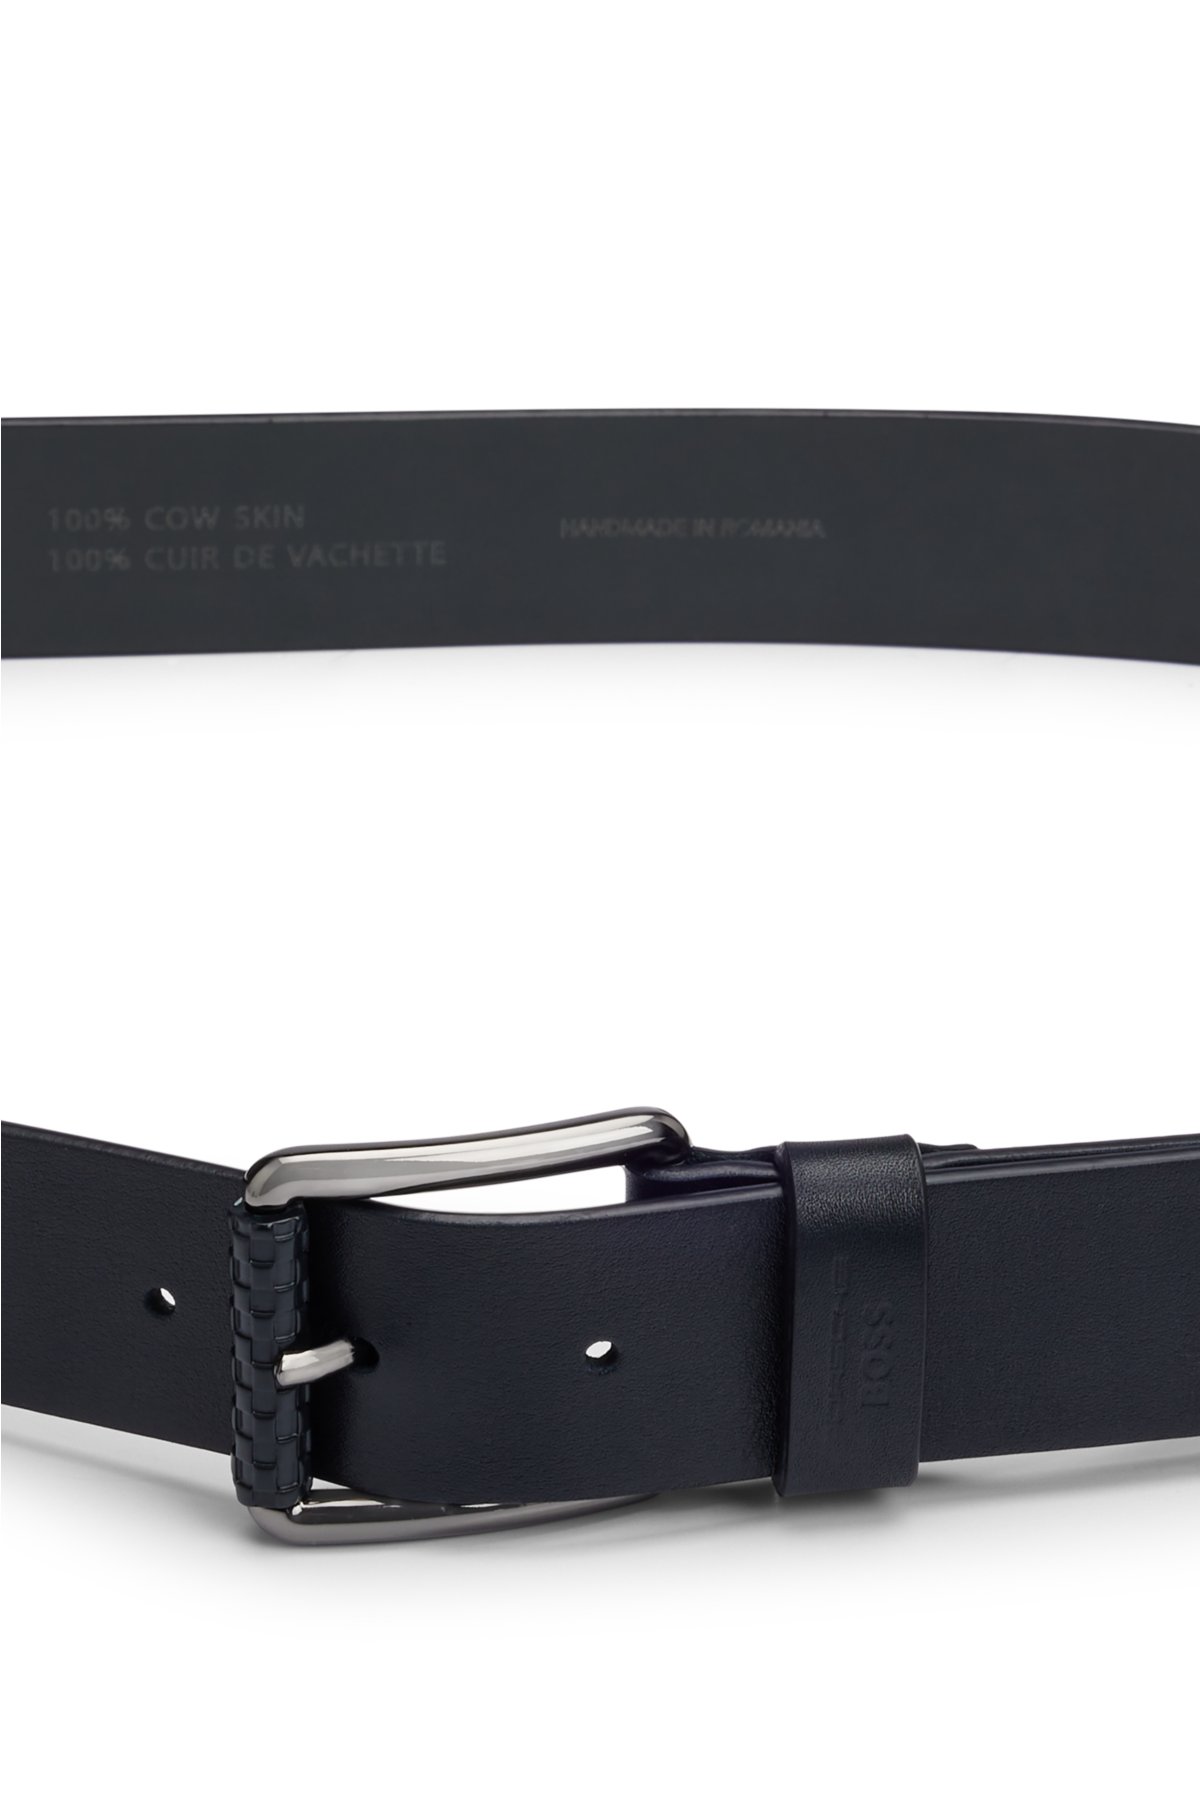 Porsche x BOSS Italian-leather belt with branded keeper, Dark Blue